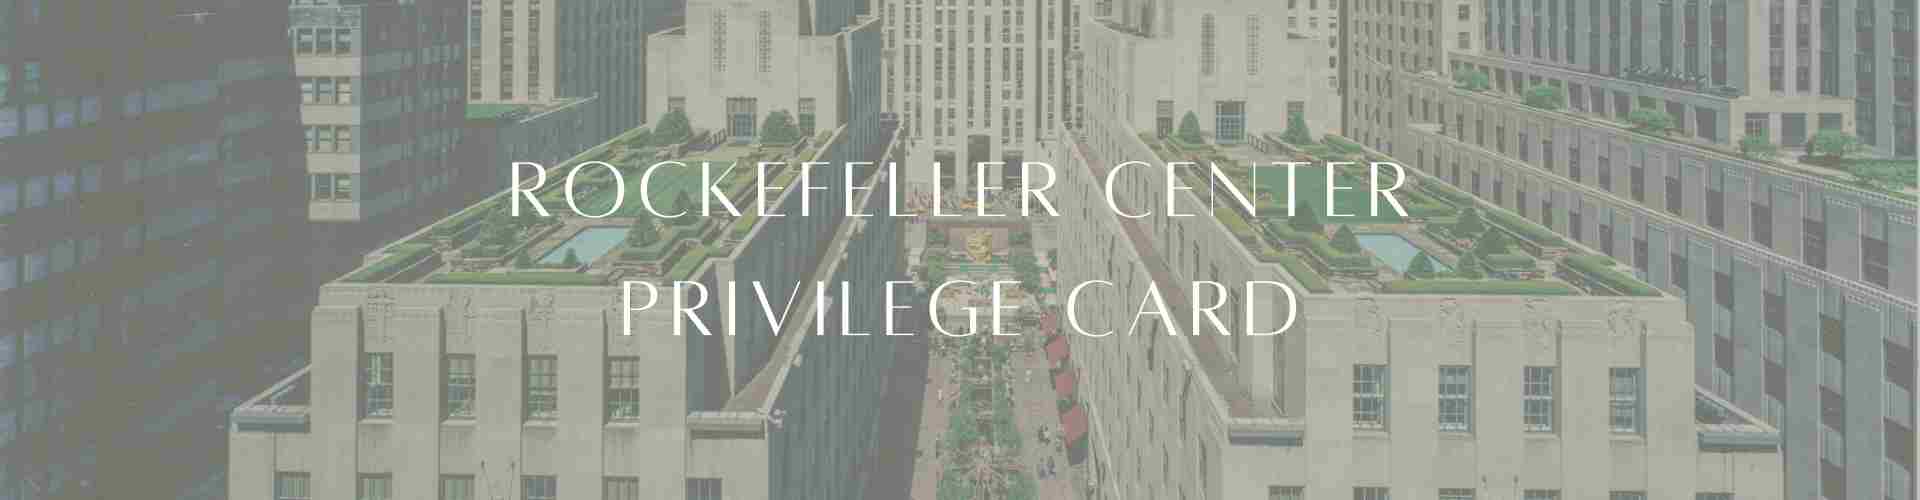 Rockefeller Center Privilege Card